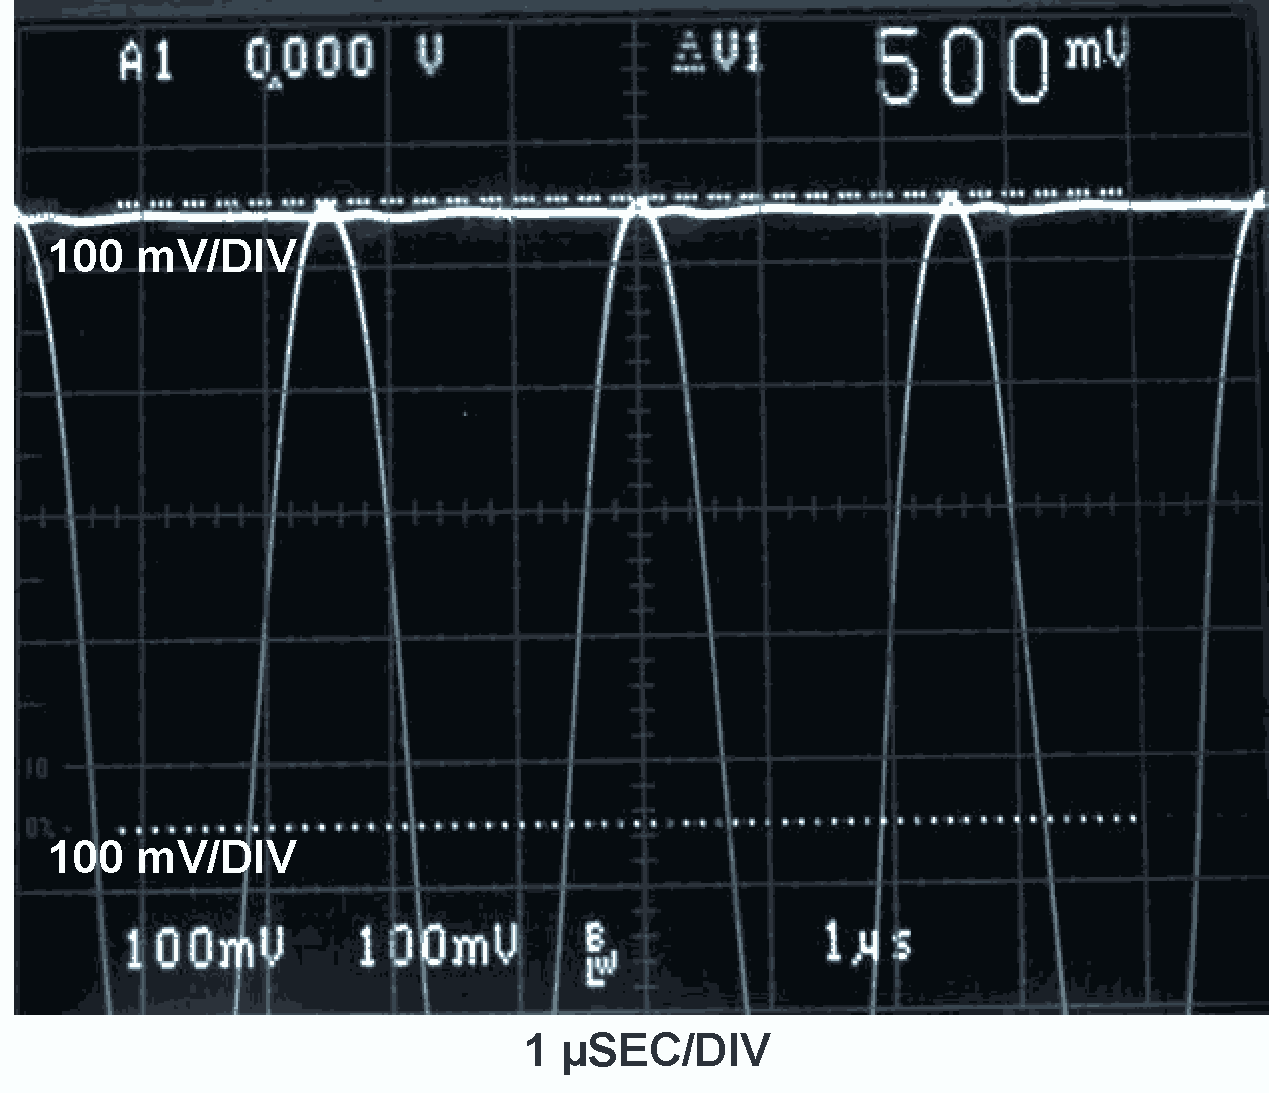 An oscilloscope photo displays input versus output voltages for a 400-kHz, 500-mV sine wave.